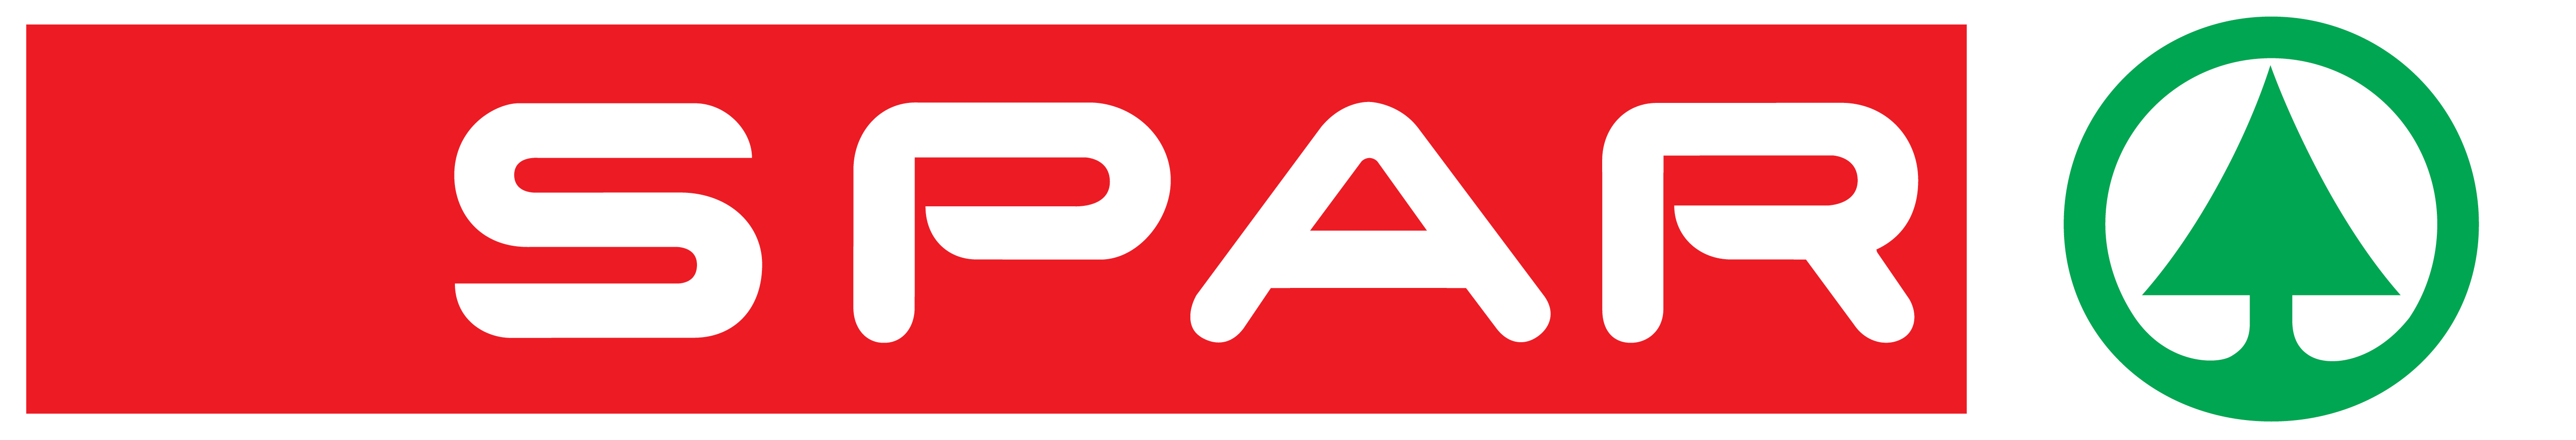 Spar Brand Logo